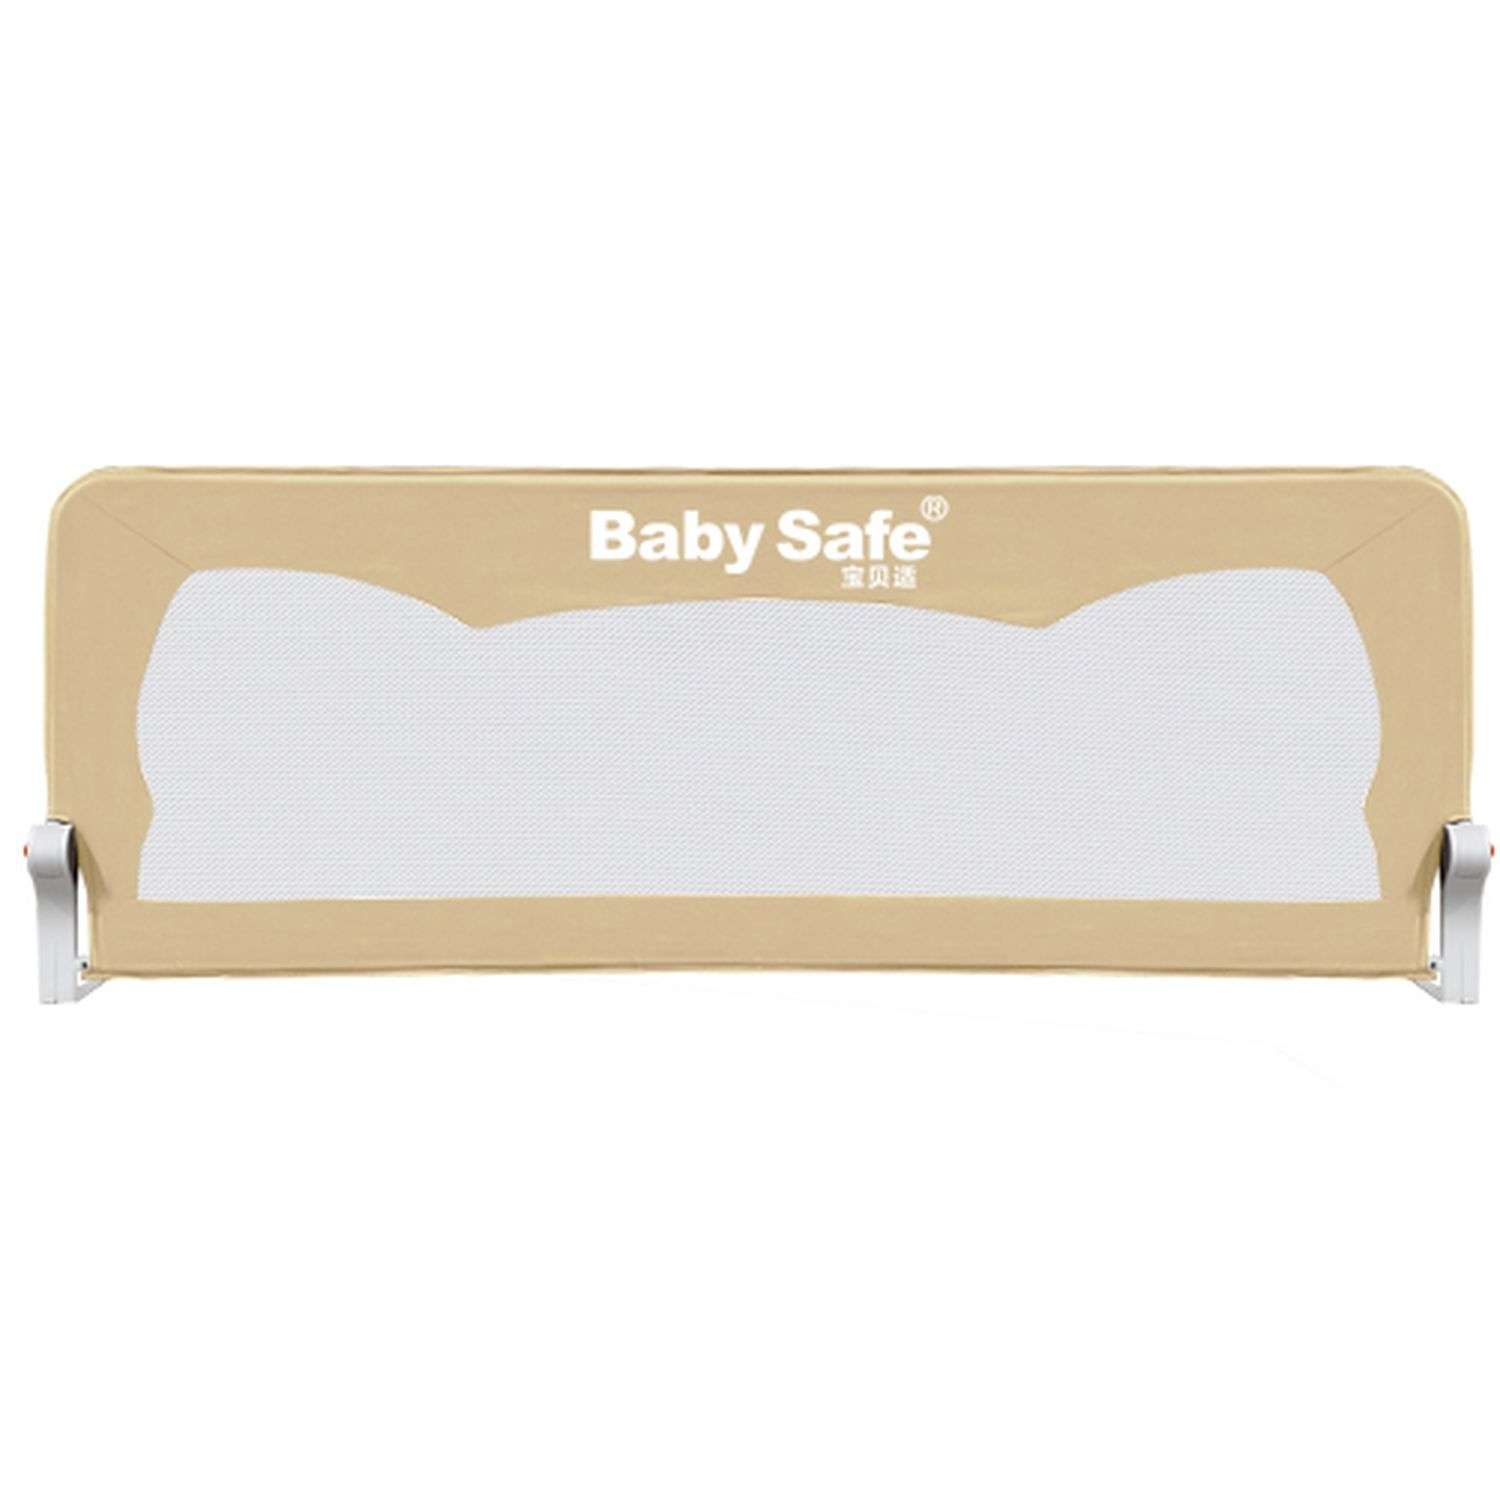 Барьер защитный для кровати Baby Safe защитный для кровати Ушки 150х42 бежевый - фото 2